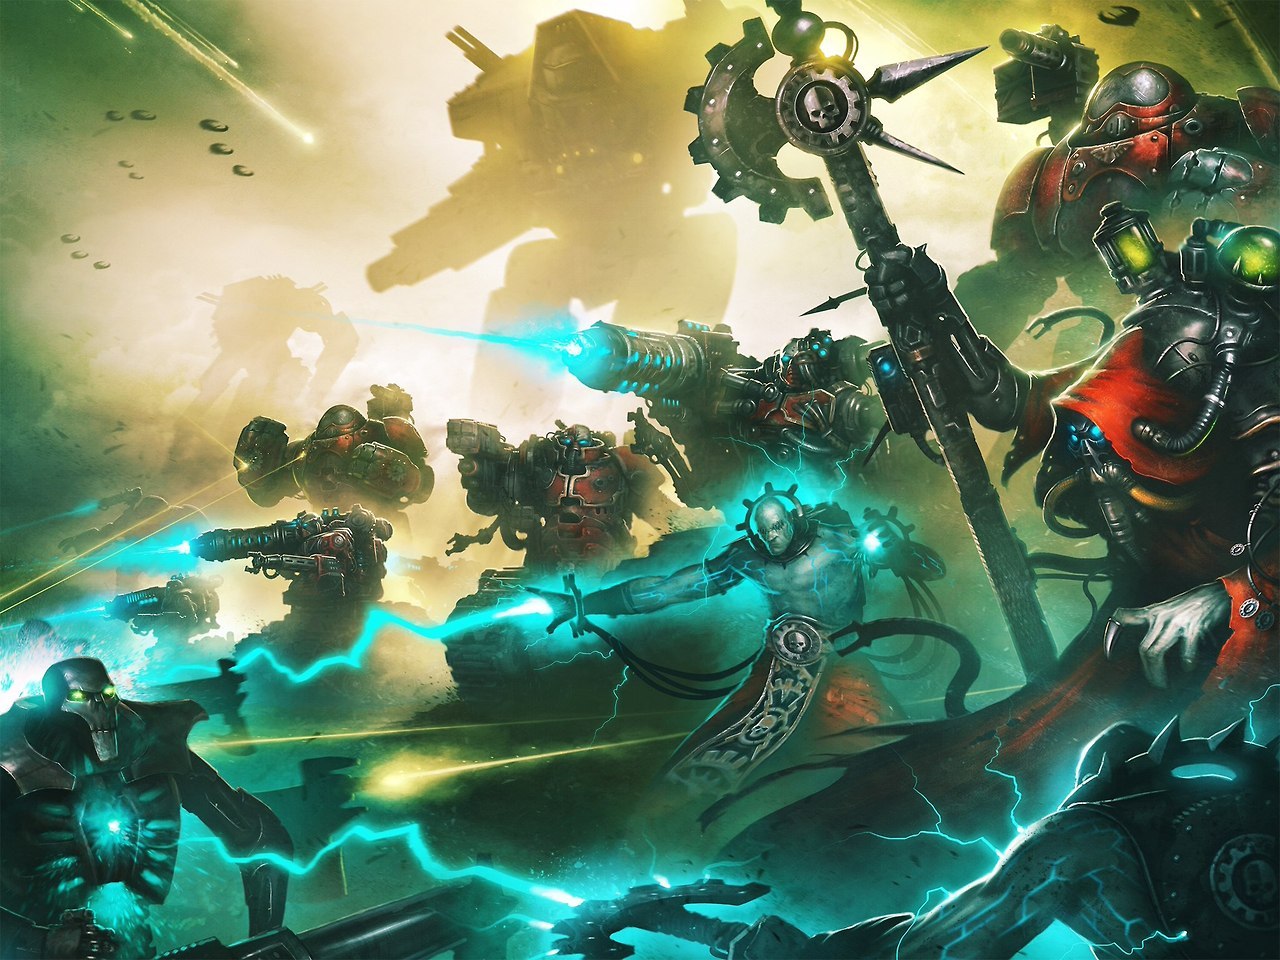 Warhammer 40k artwork — Adeptus Mechanicus battle the Necrons